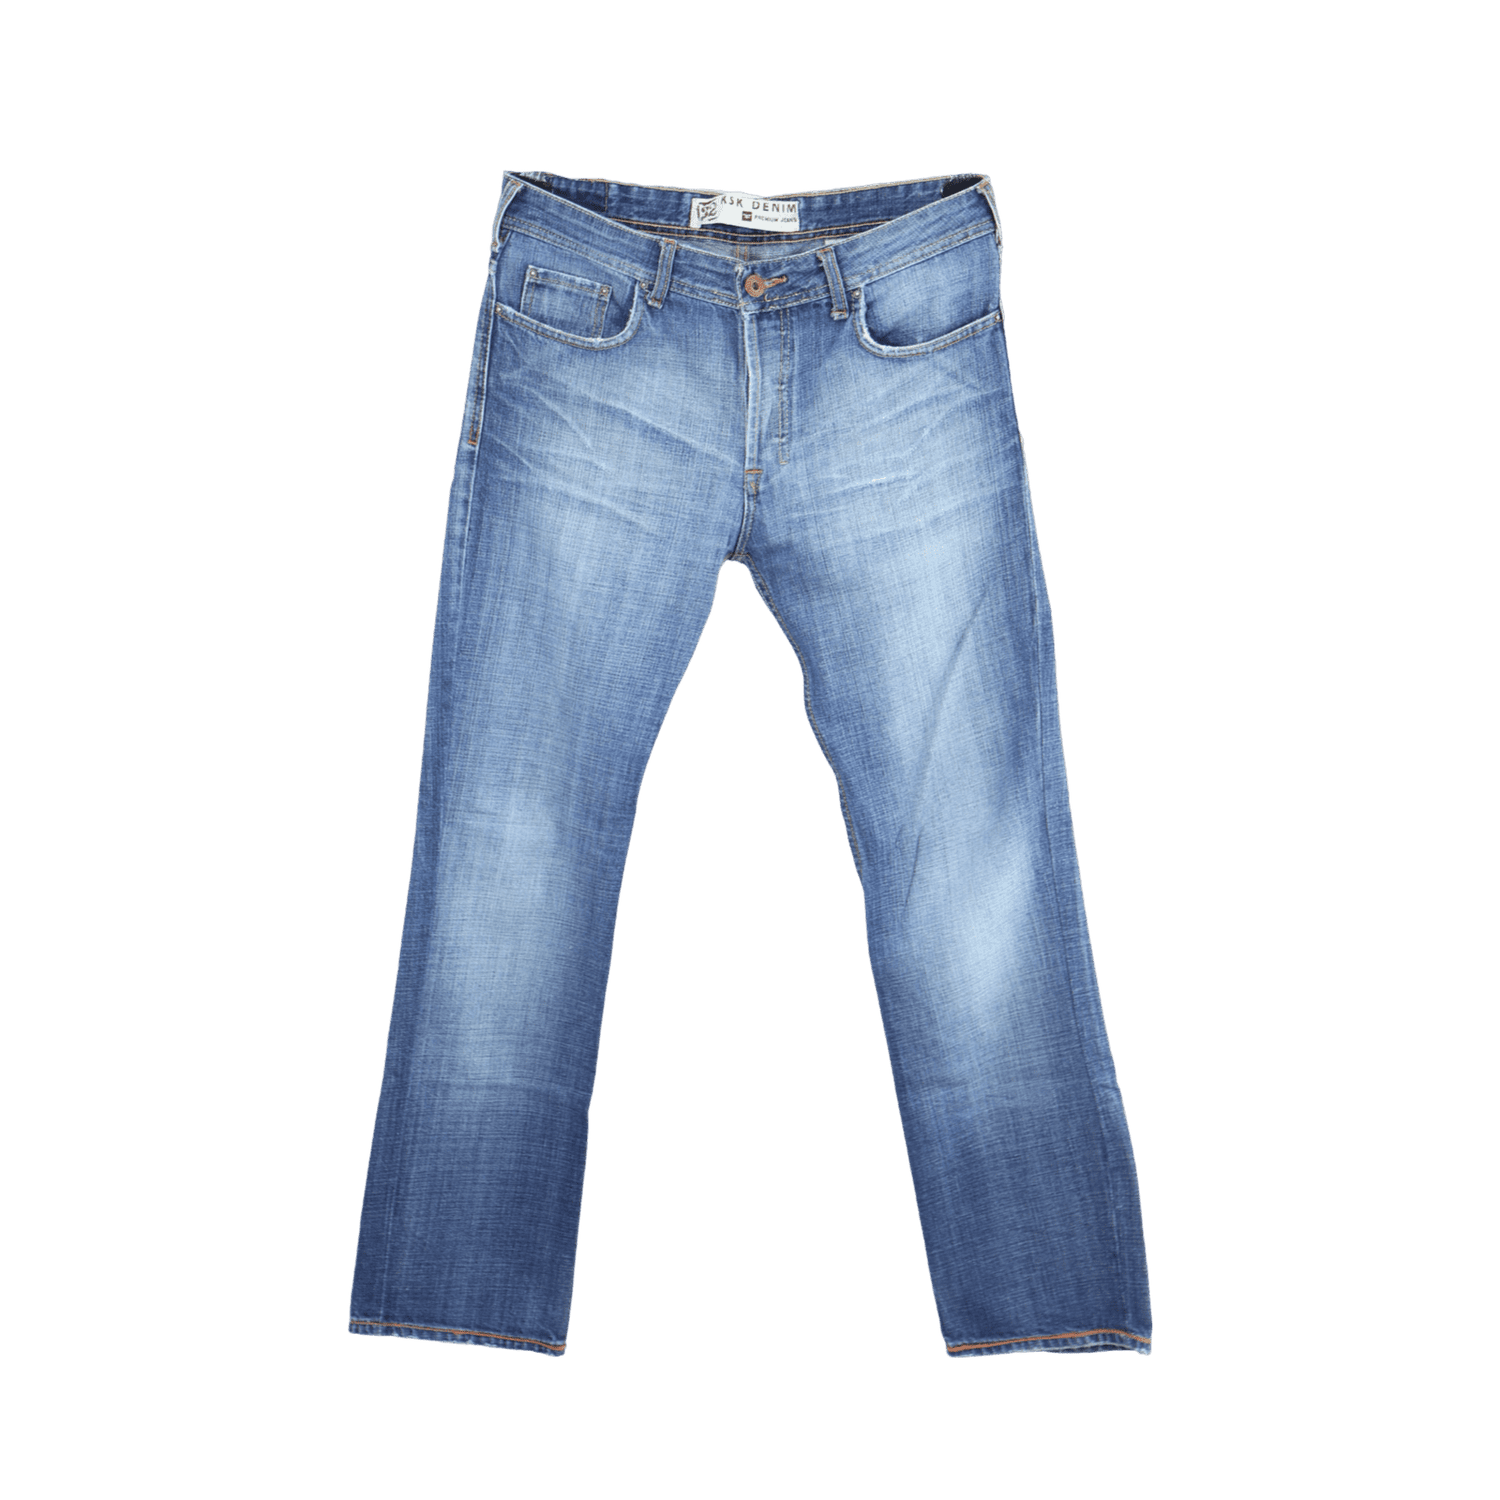 Inferiores-masculino-jeans